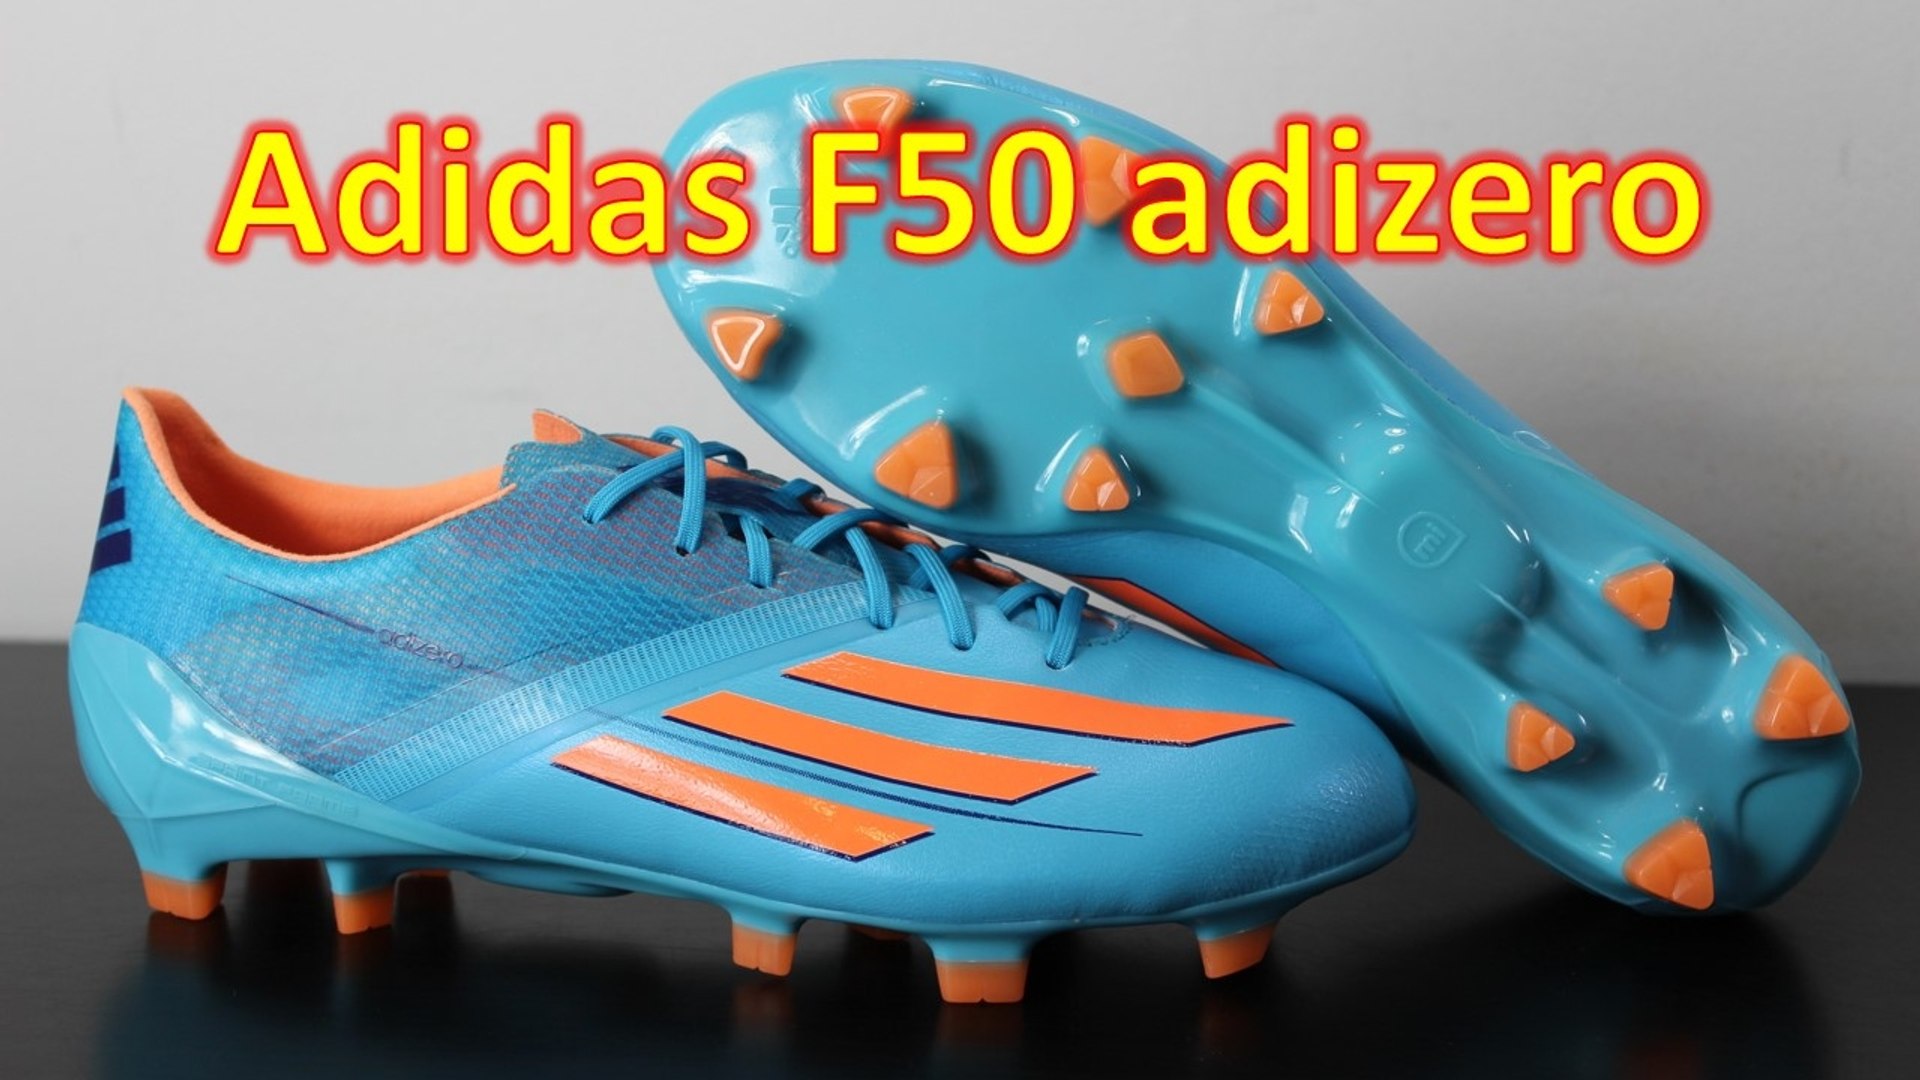 adidas f50 adizero orange and blue